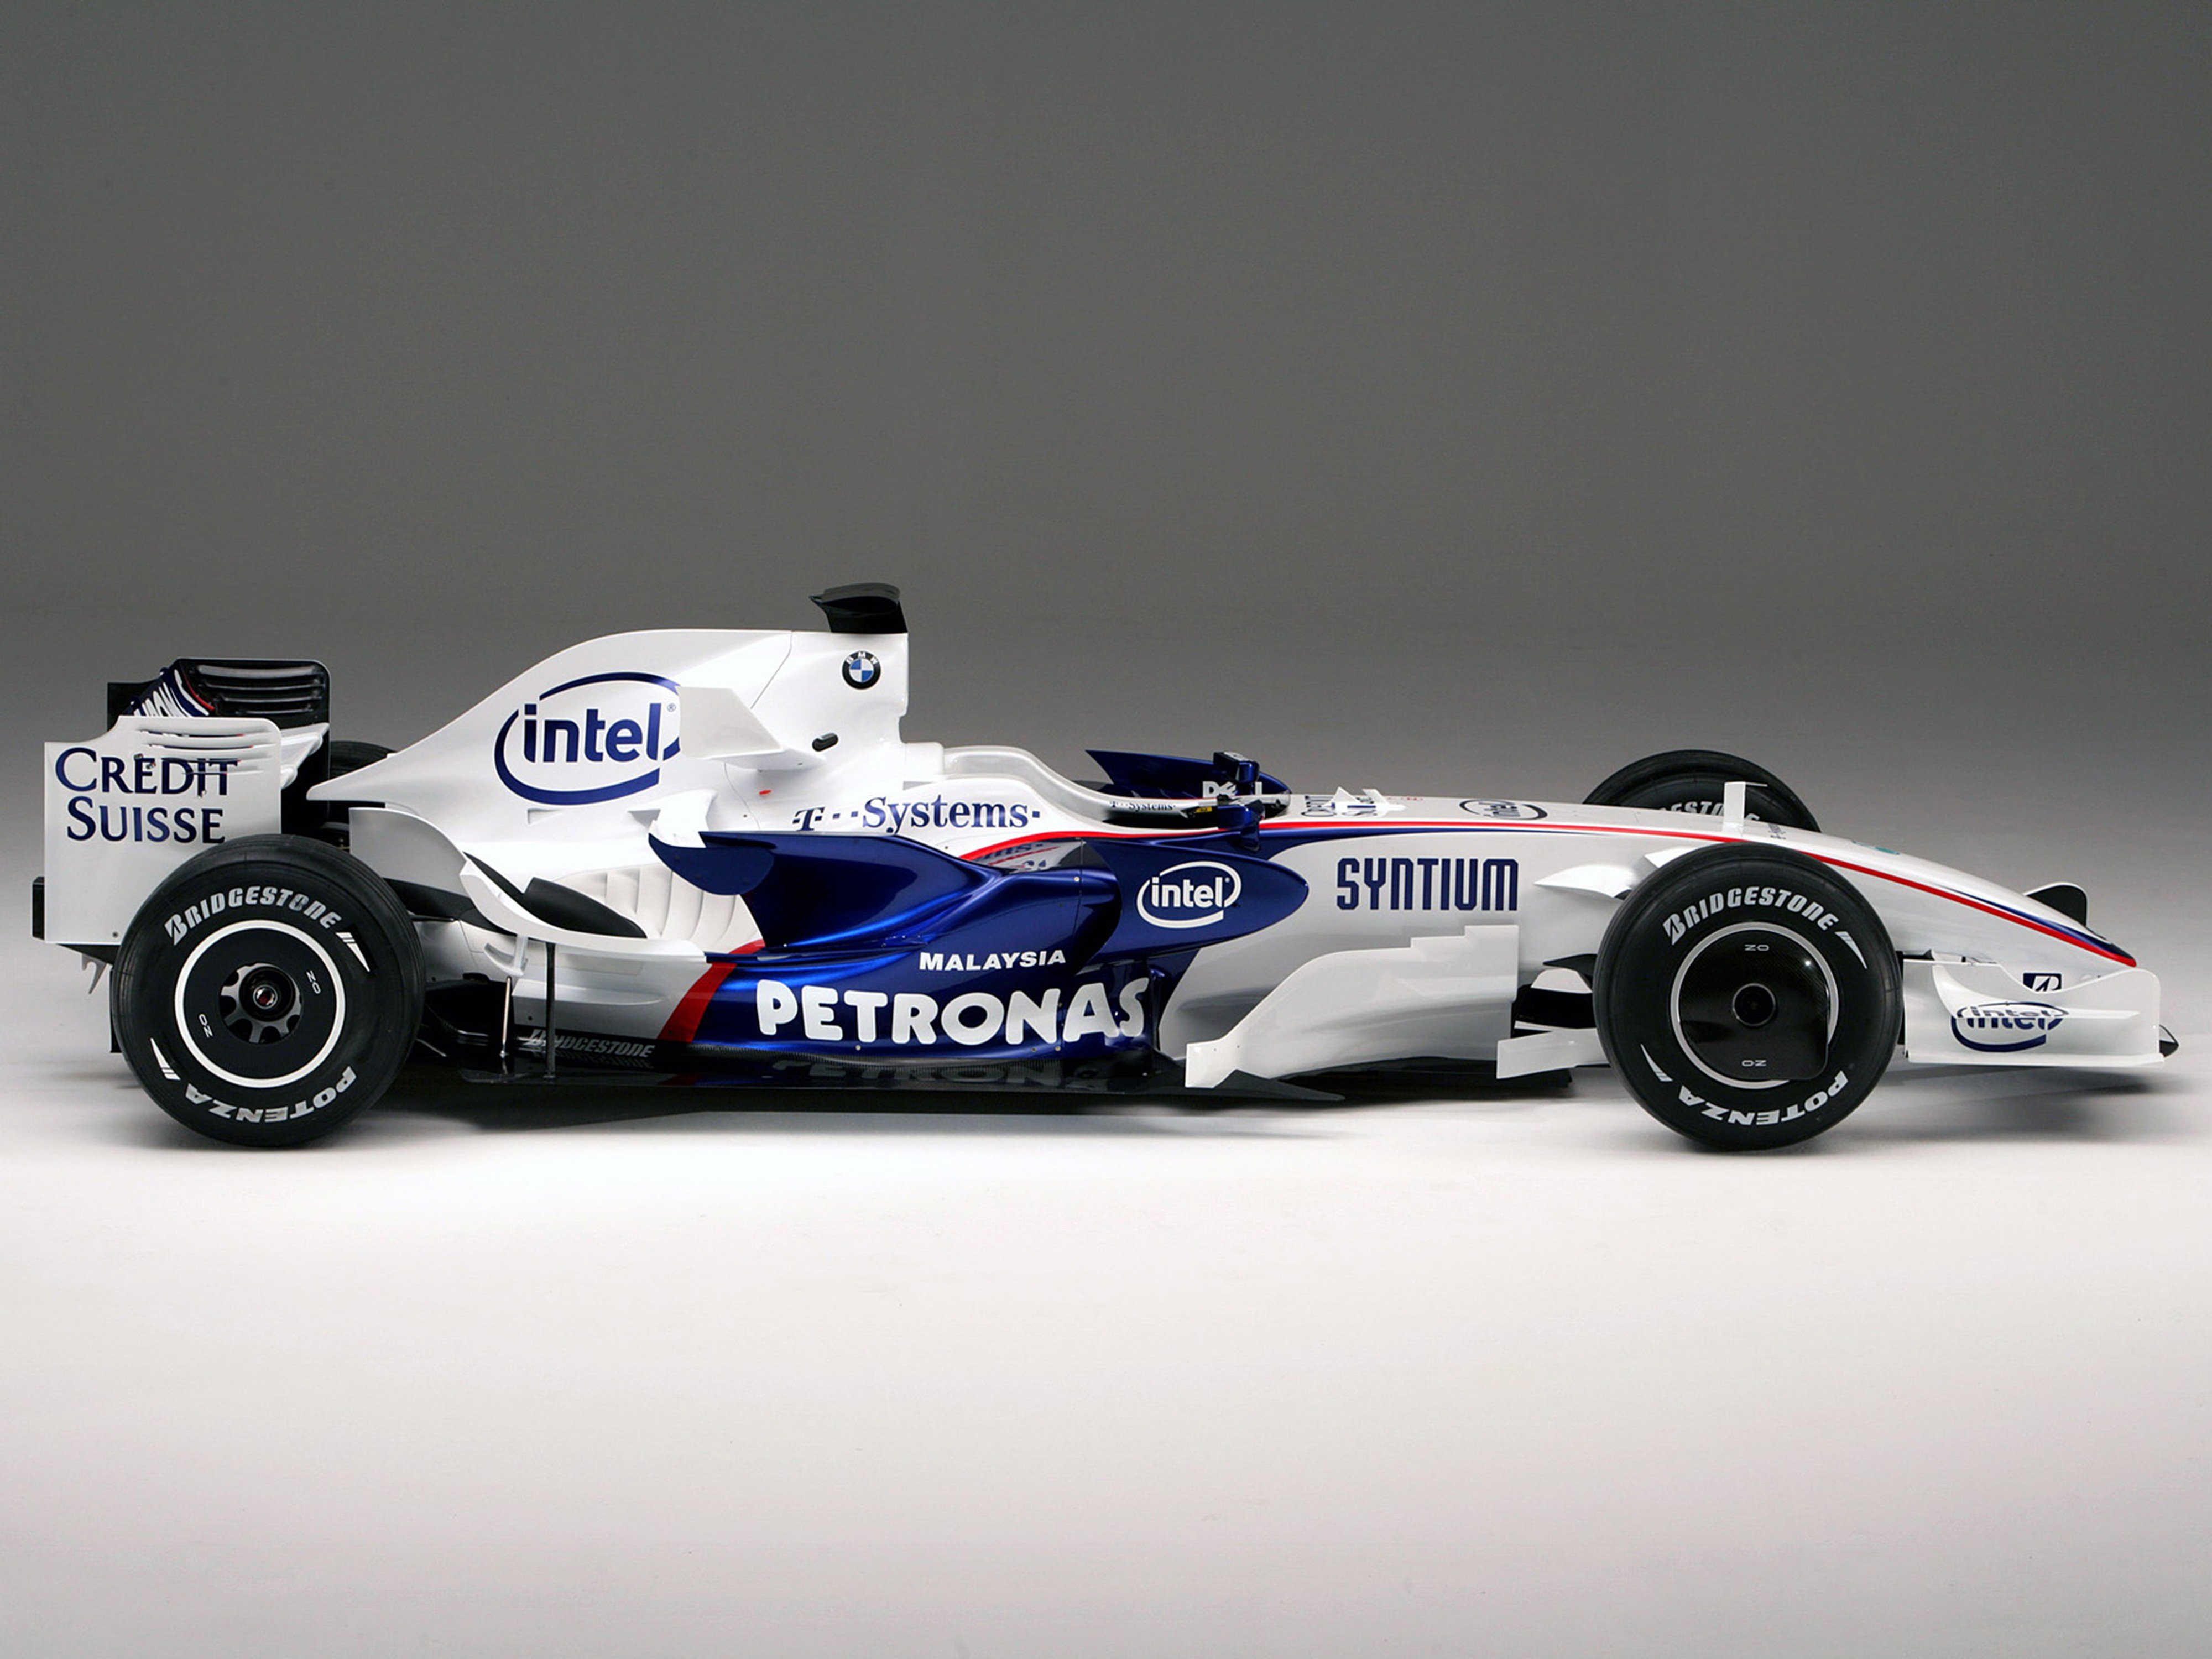 2008 Formula 1 Bmw Sauber F1 08 Race Car Racing 4000x3000 3 Wallpapers Hd Desktop And Mobile Backgrounds